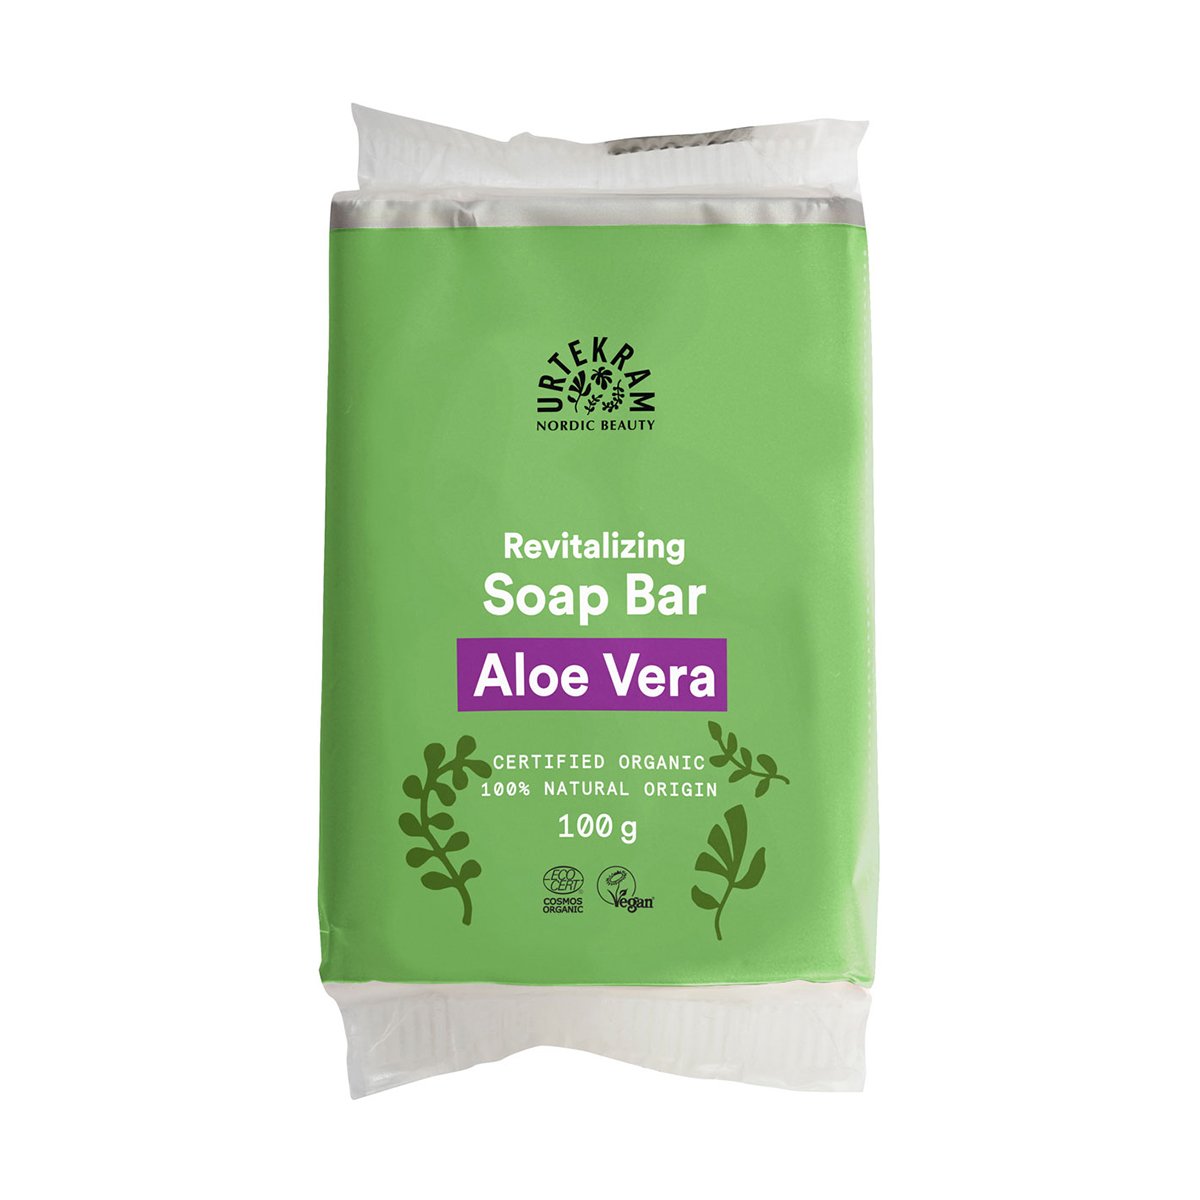 Urtekram Aloe Vera Soap Bar 100g